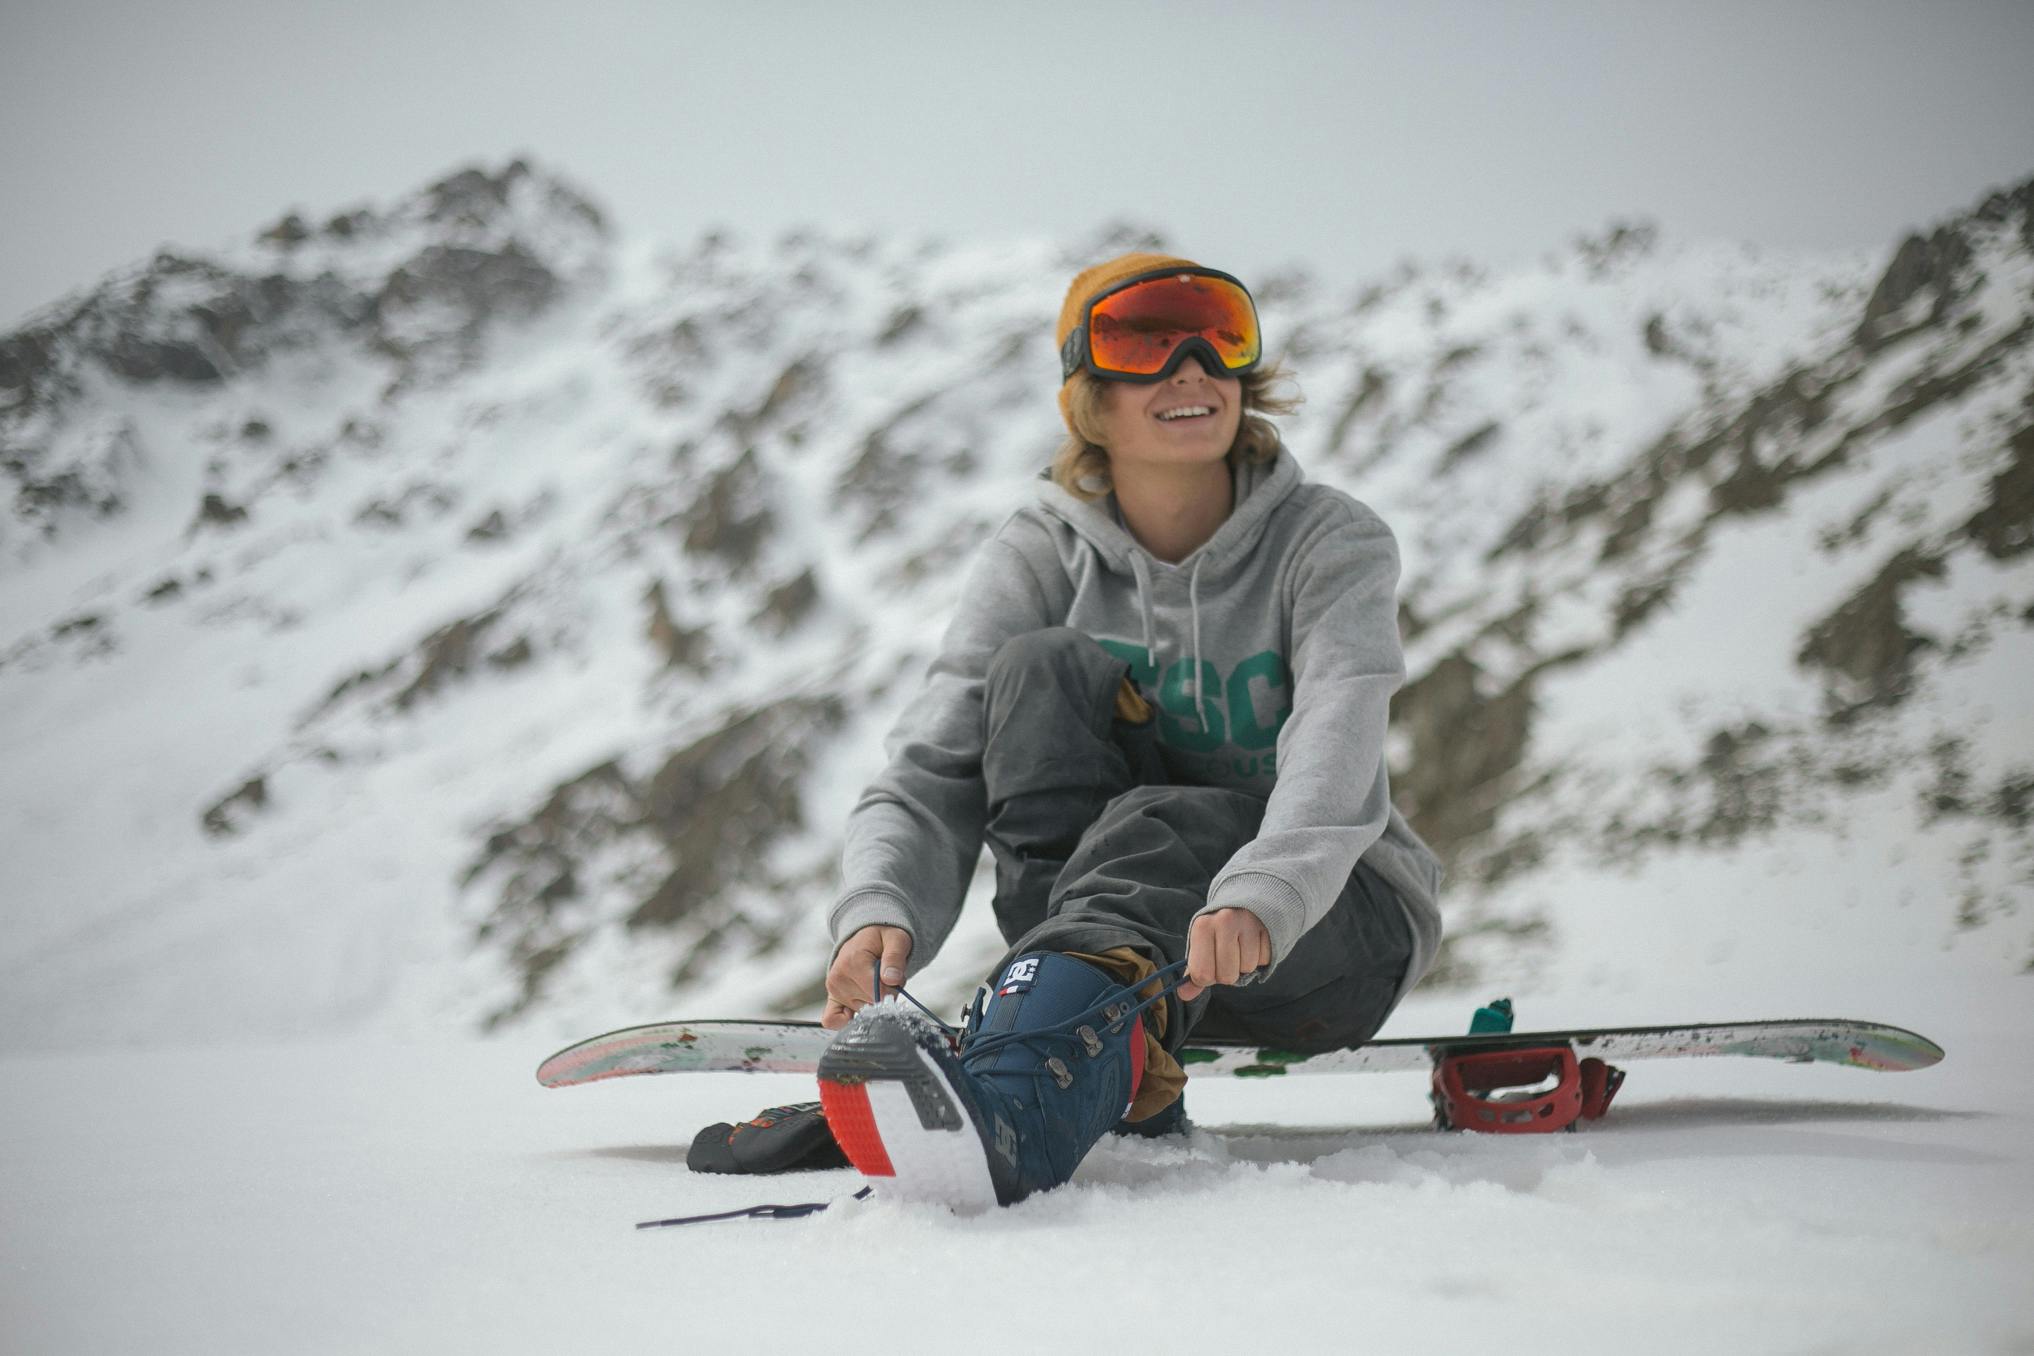 Snowboarder on snowy mountain